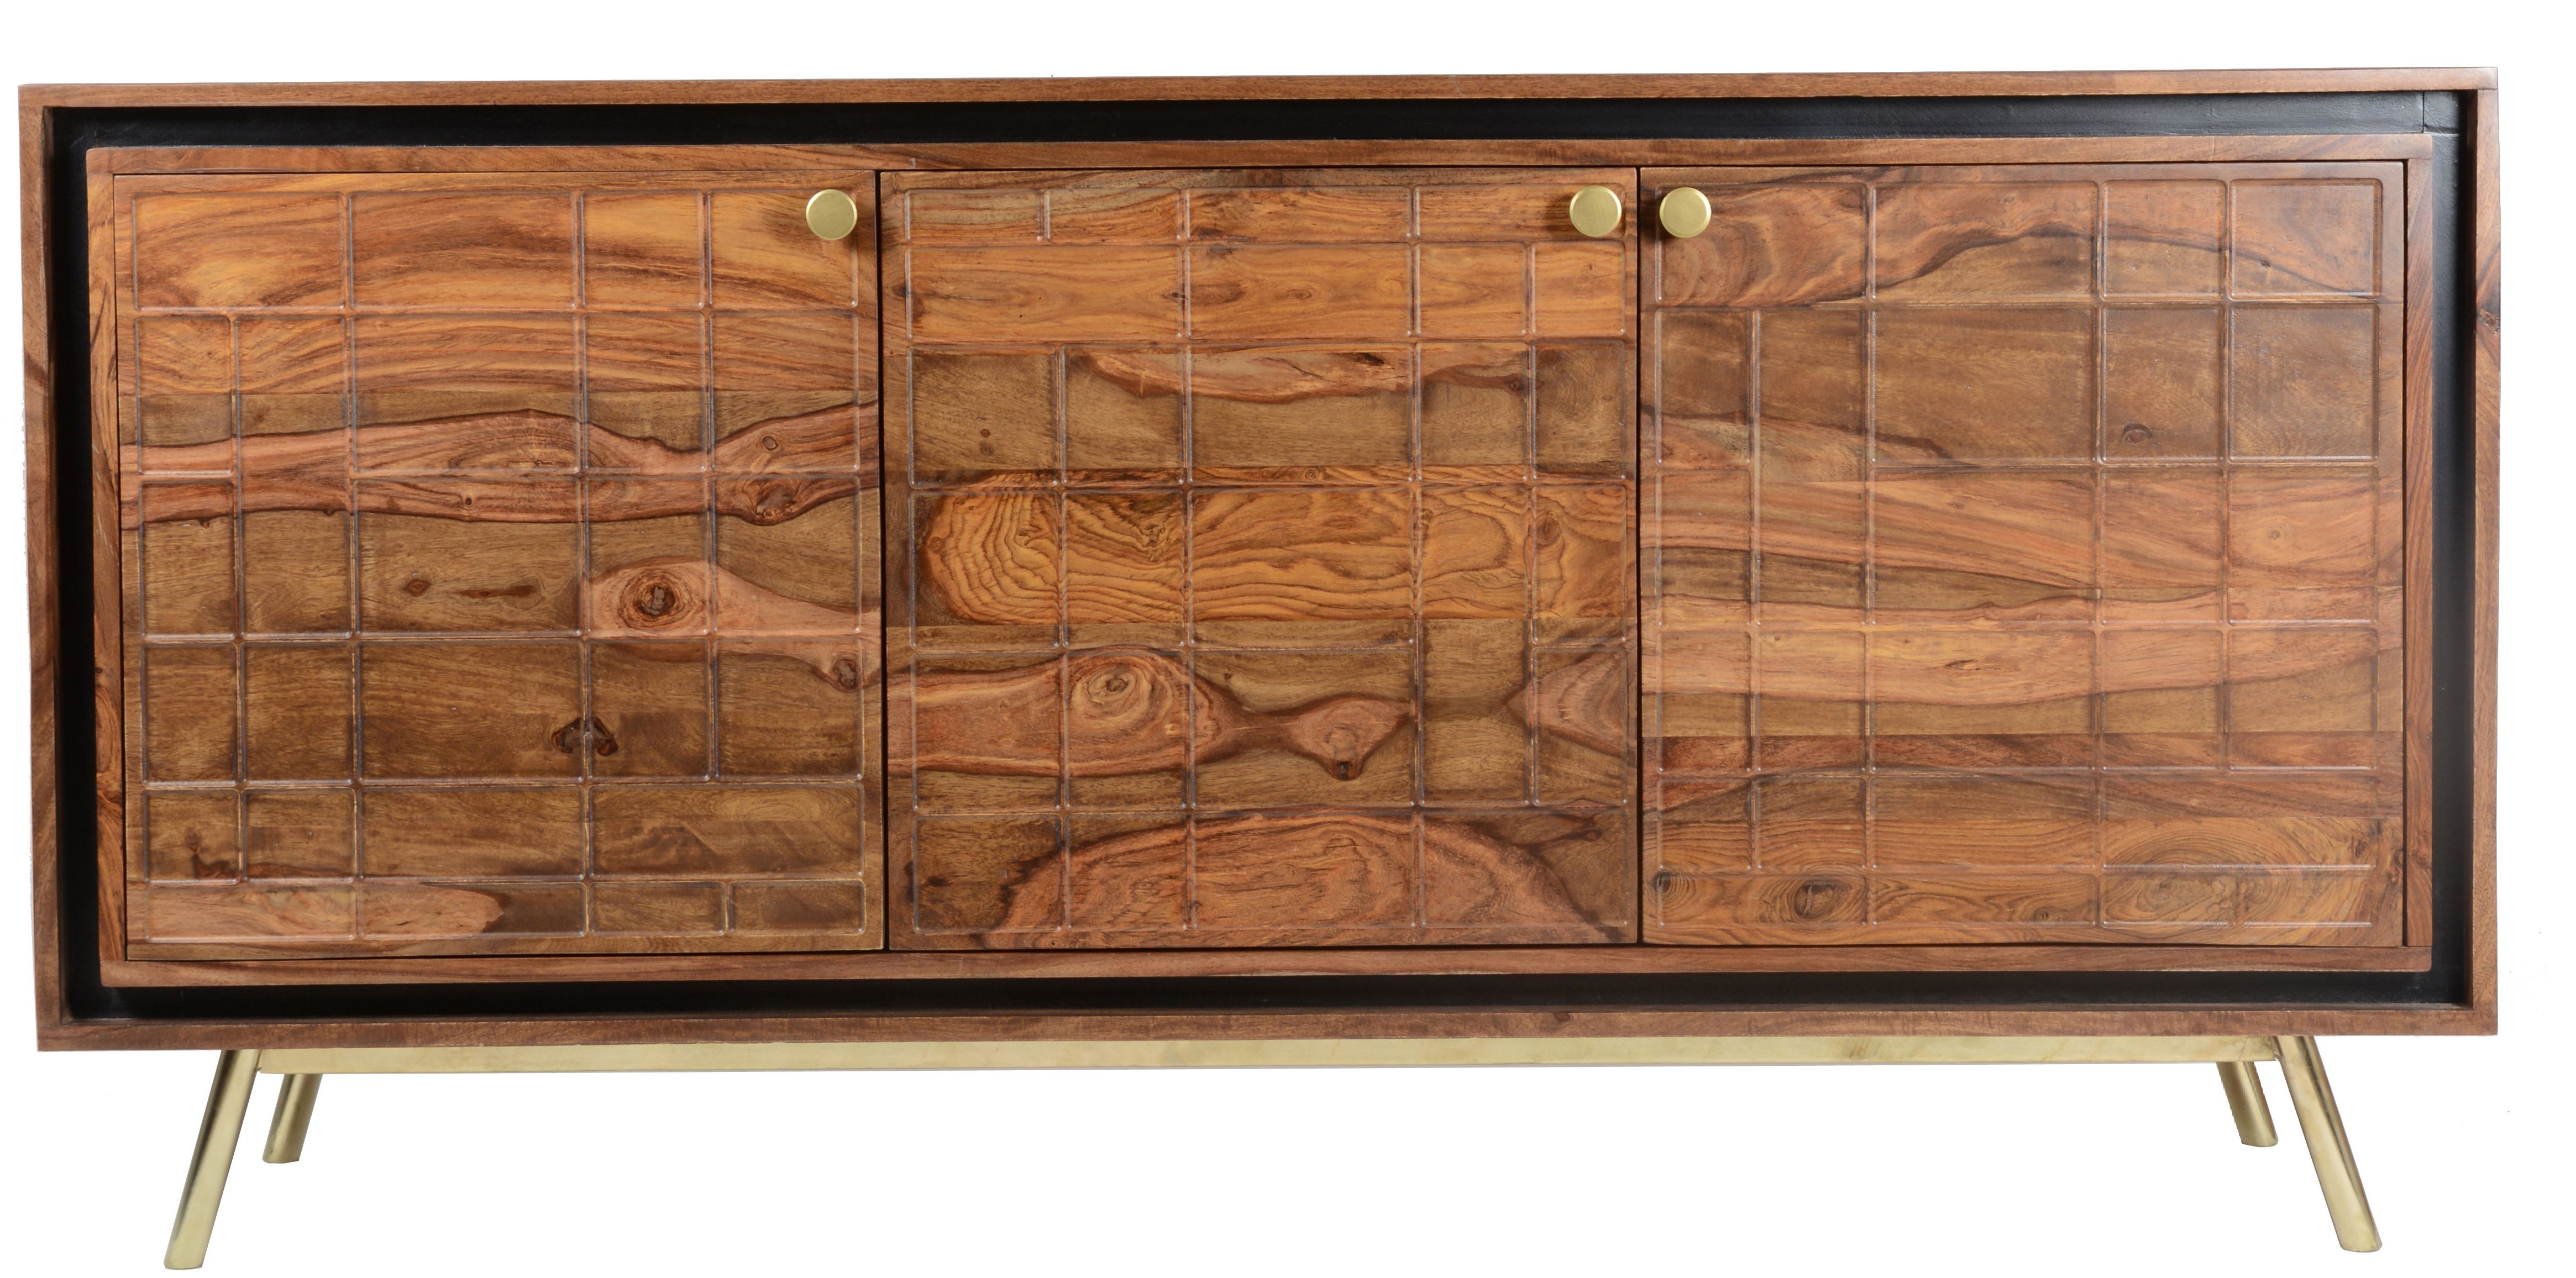 Extra Long Sideboard | Wayfair For Arminta Wood Sideboards (Gallery 5 of 20)